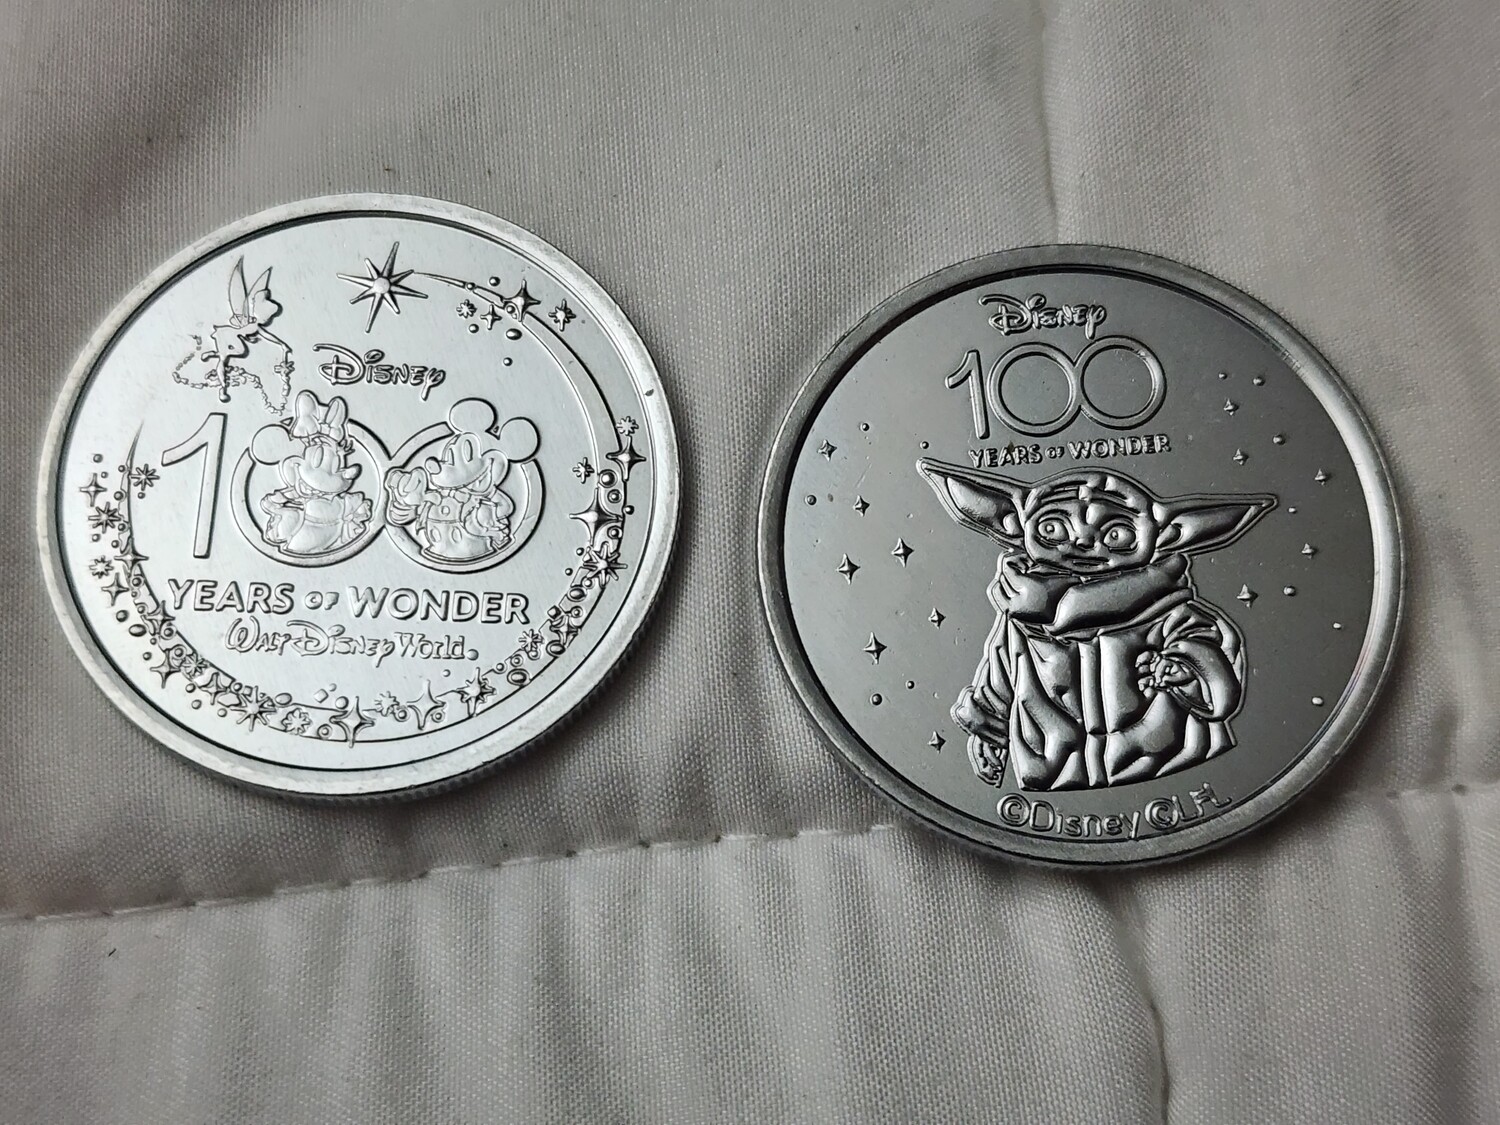 The Child Grogu Disney 100 Years of Wonder medallion coin